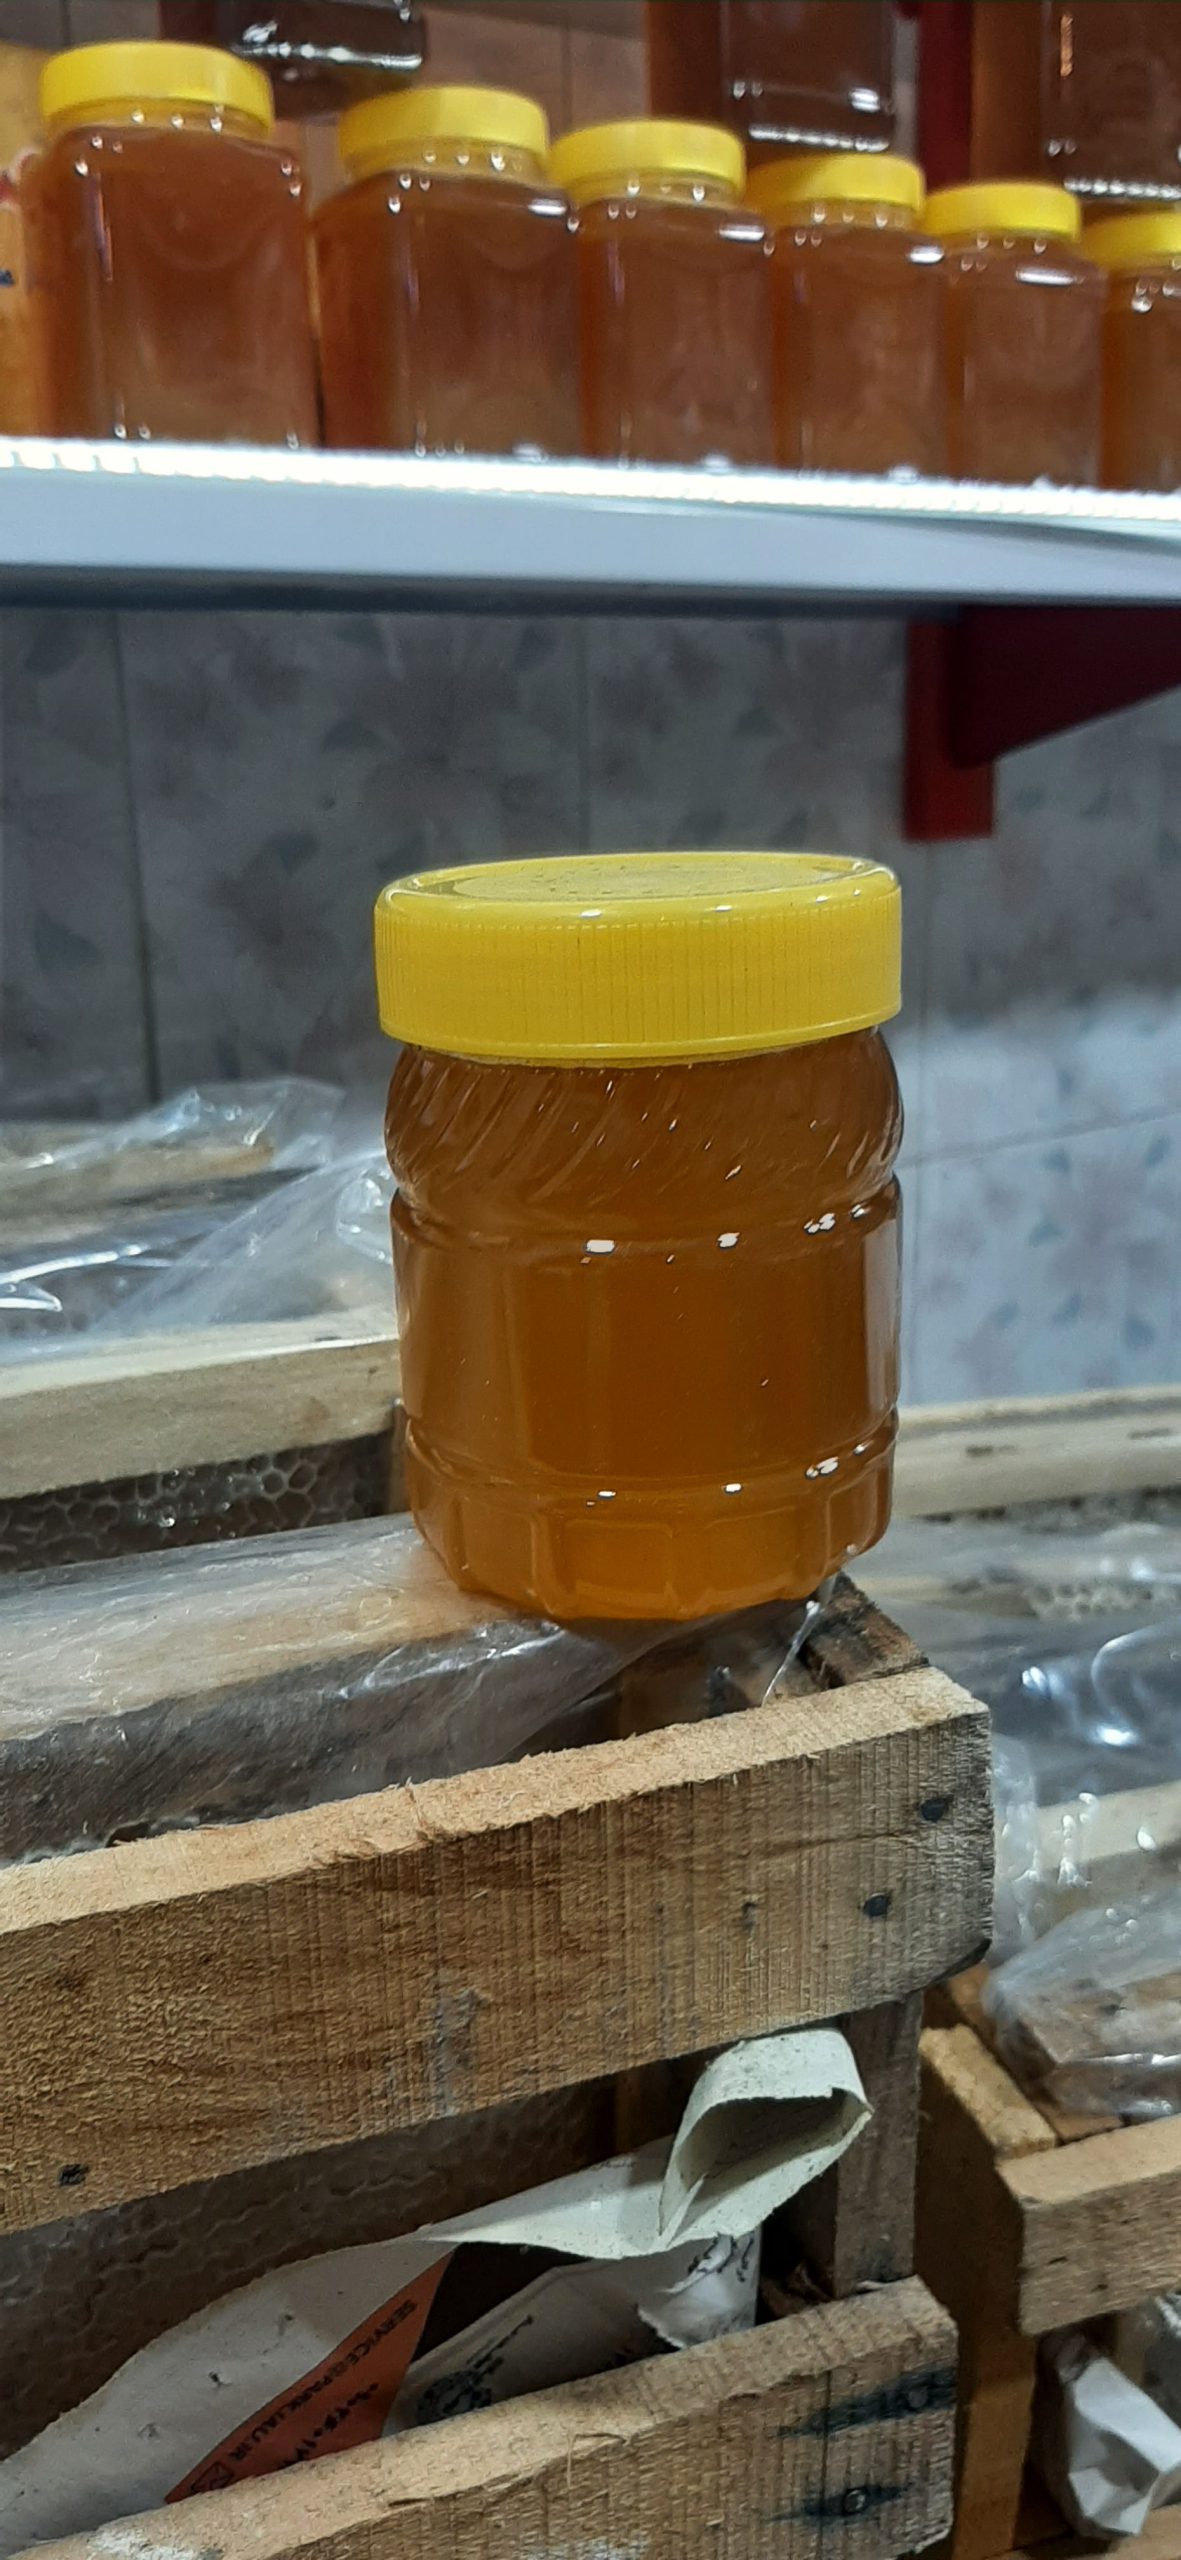 عسل بدون موم